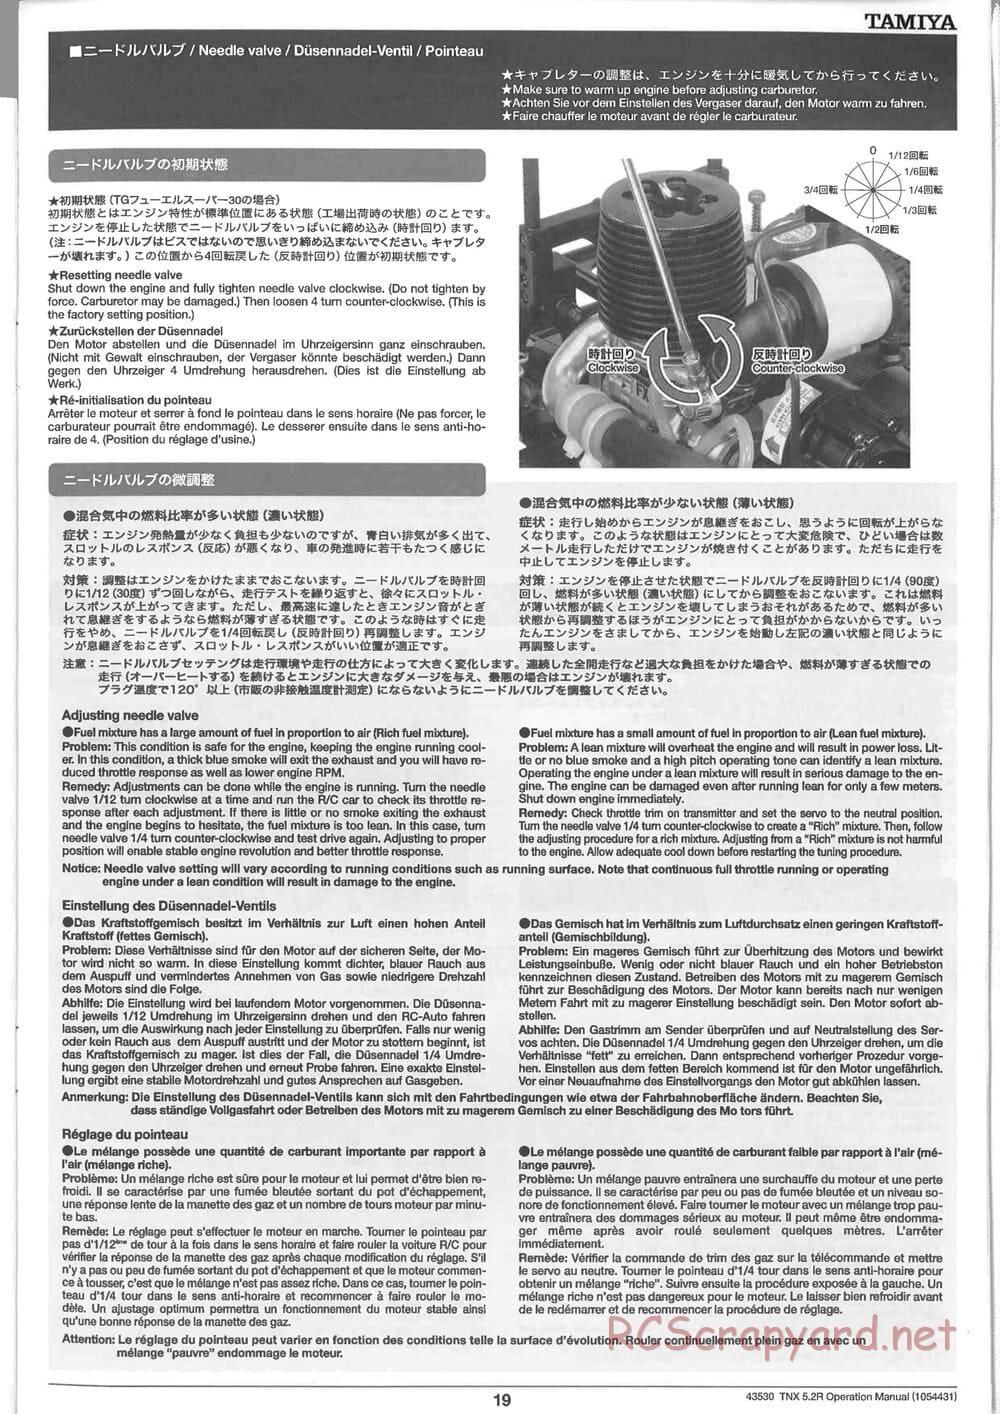 Tamiya - TNX 5.2R - TGM-04 - Operating Manual - Page 19